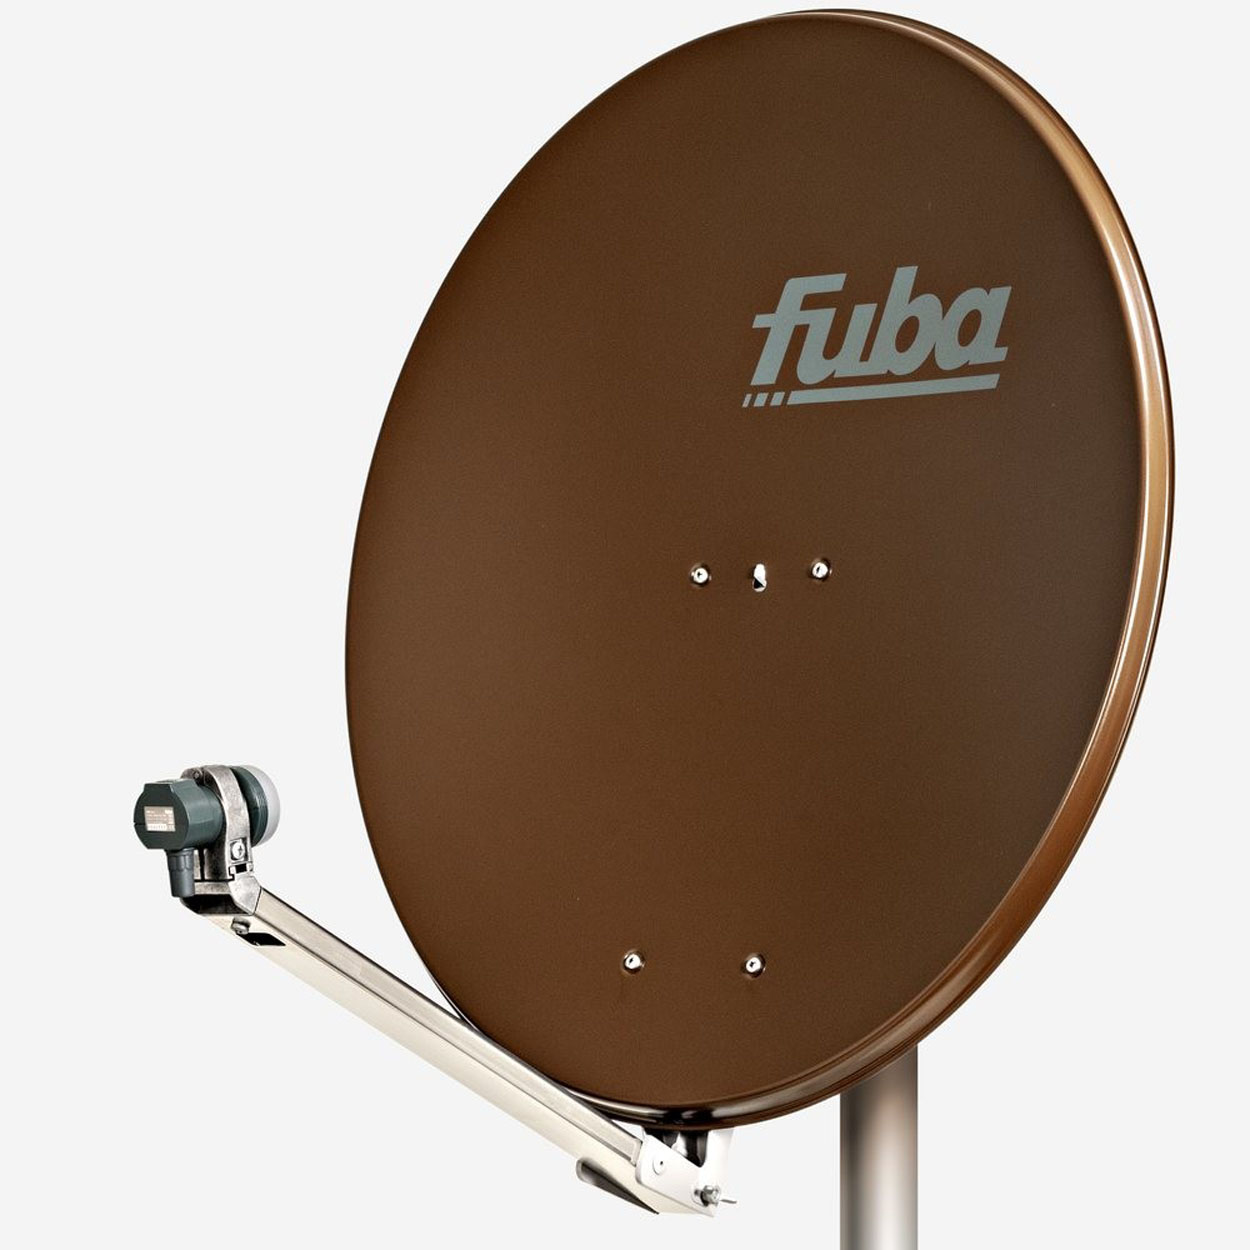 1 FUBA Single Anlage Anlage Teilnehmer Schüssel Satelliten Sat Single DAL DEK LNB) 117 801 cm, Sat LNB B (80